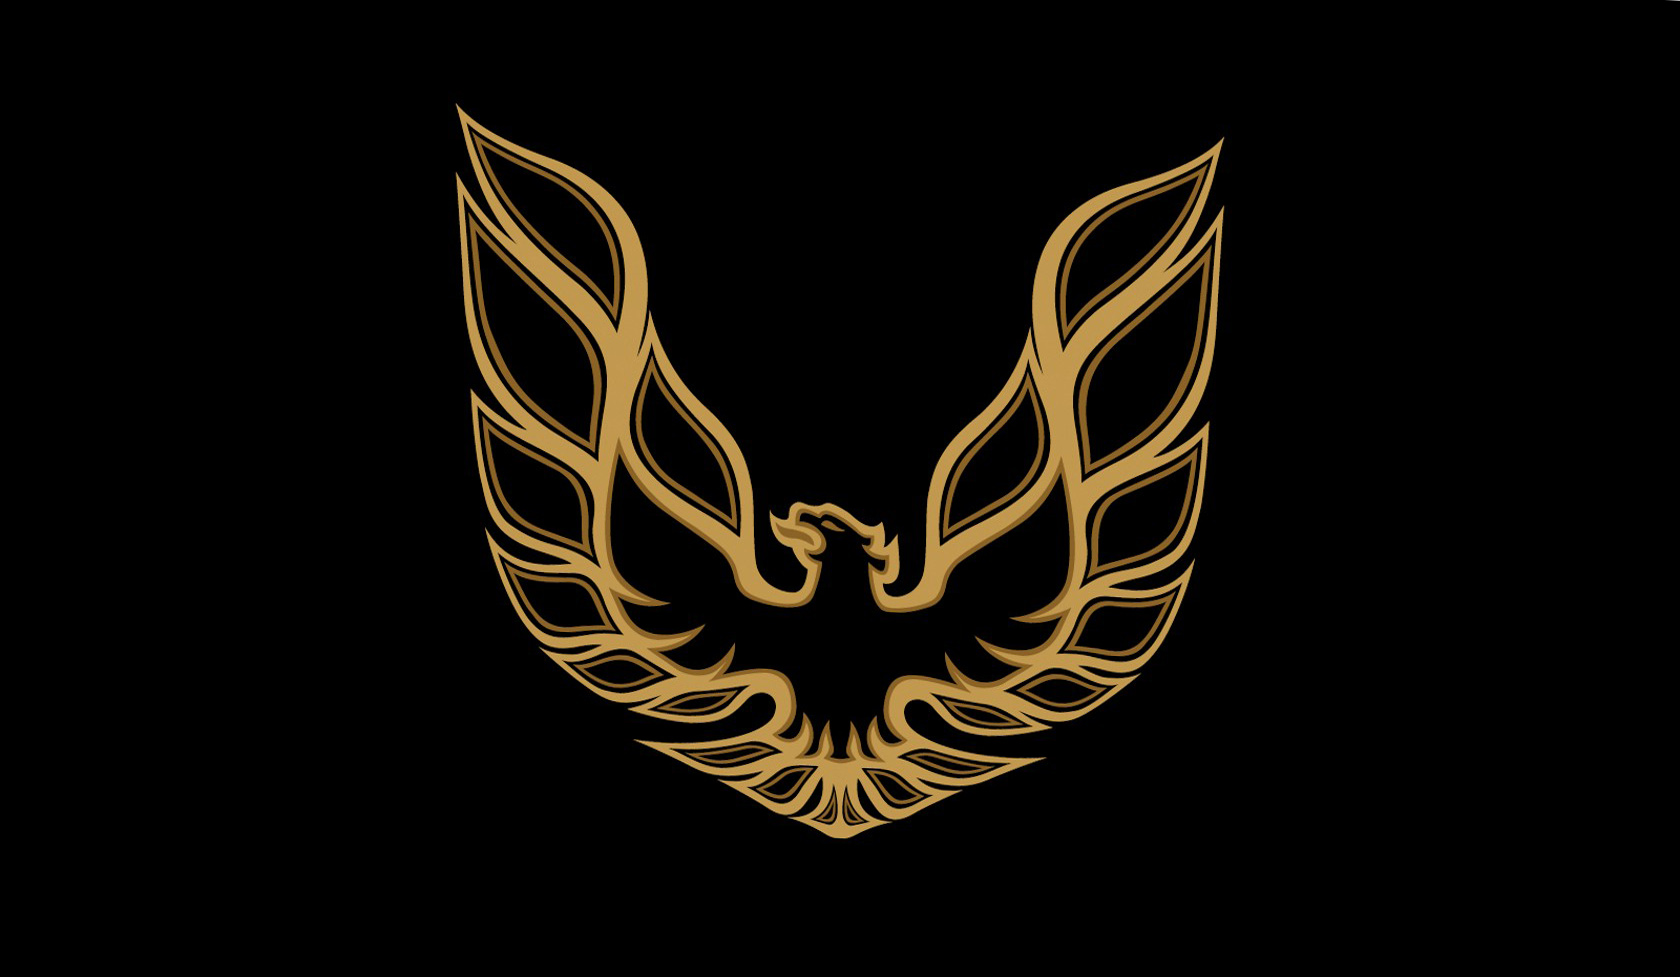 Black Background Phoenix Pontiac Firebird Logos Wallpaper